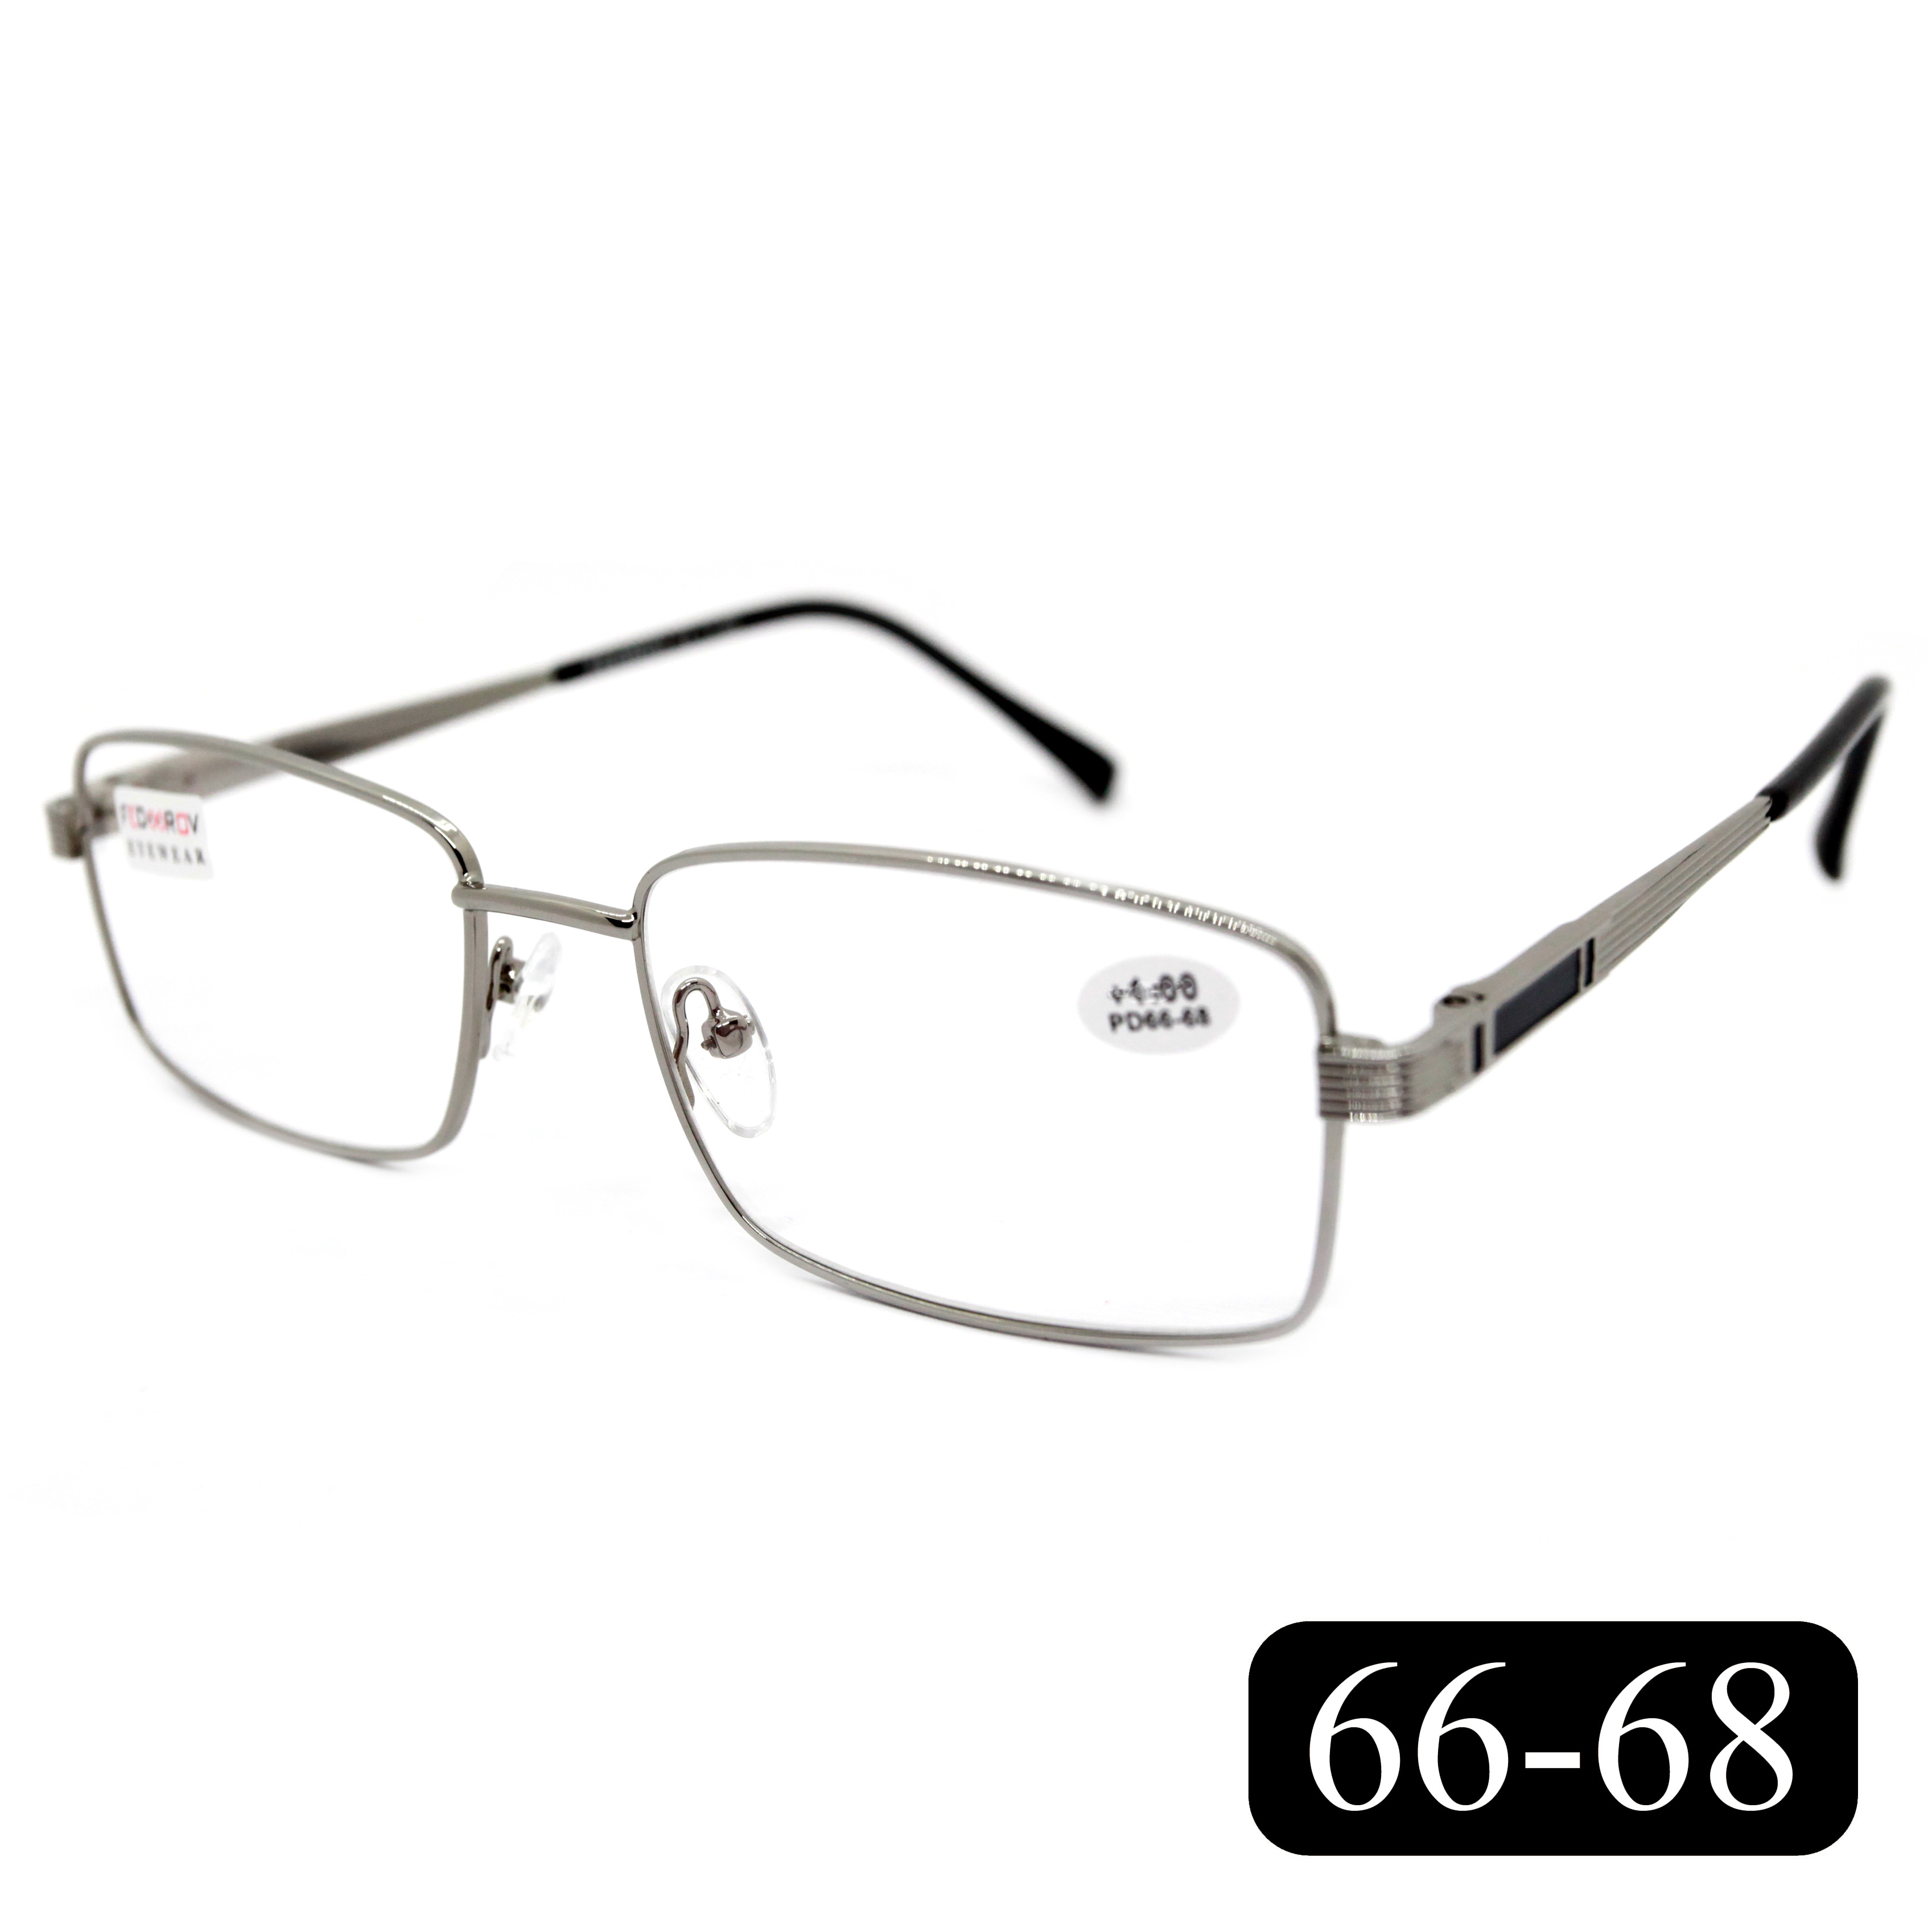 Готовые очки Fedrov 556 +5,00, без футляра, с антибликом, серебристый, РЦ 66-68